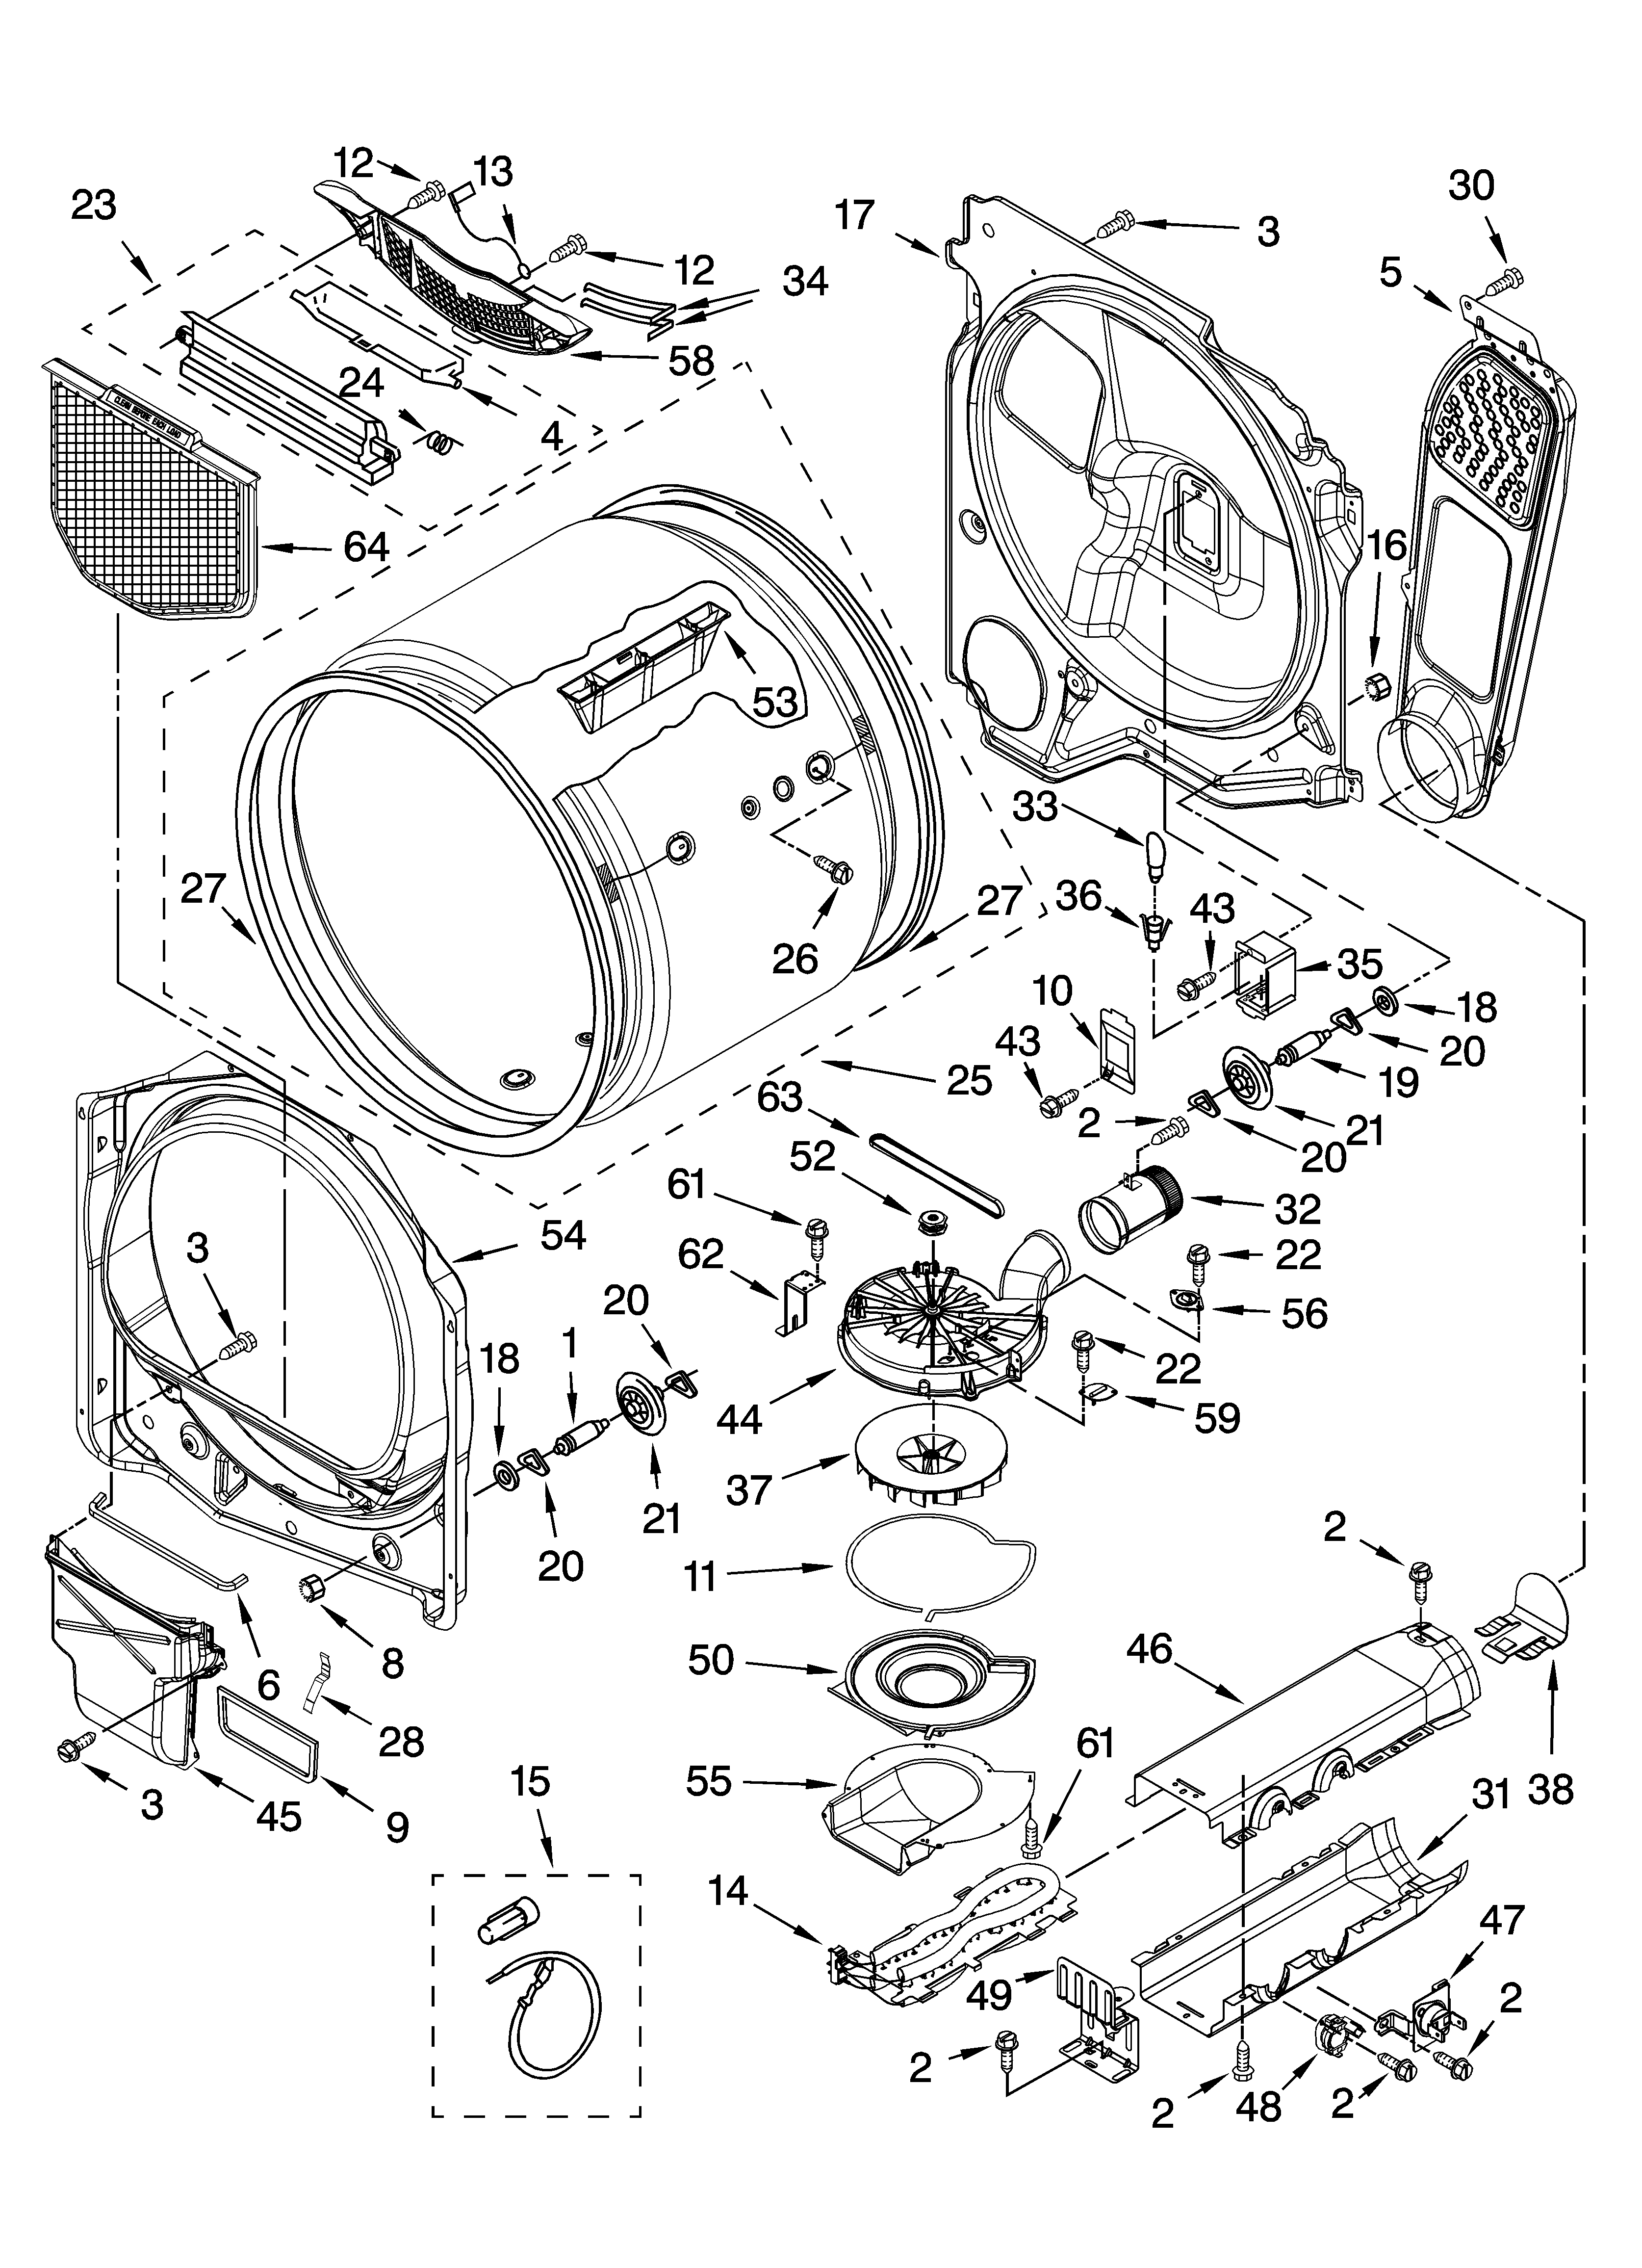 Sears Kenmore Dryer Diagram Wiring Diagrams Source